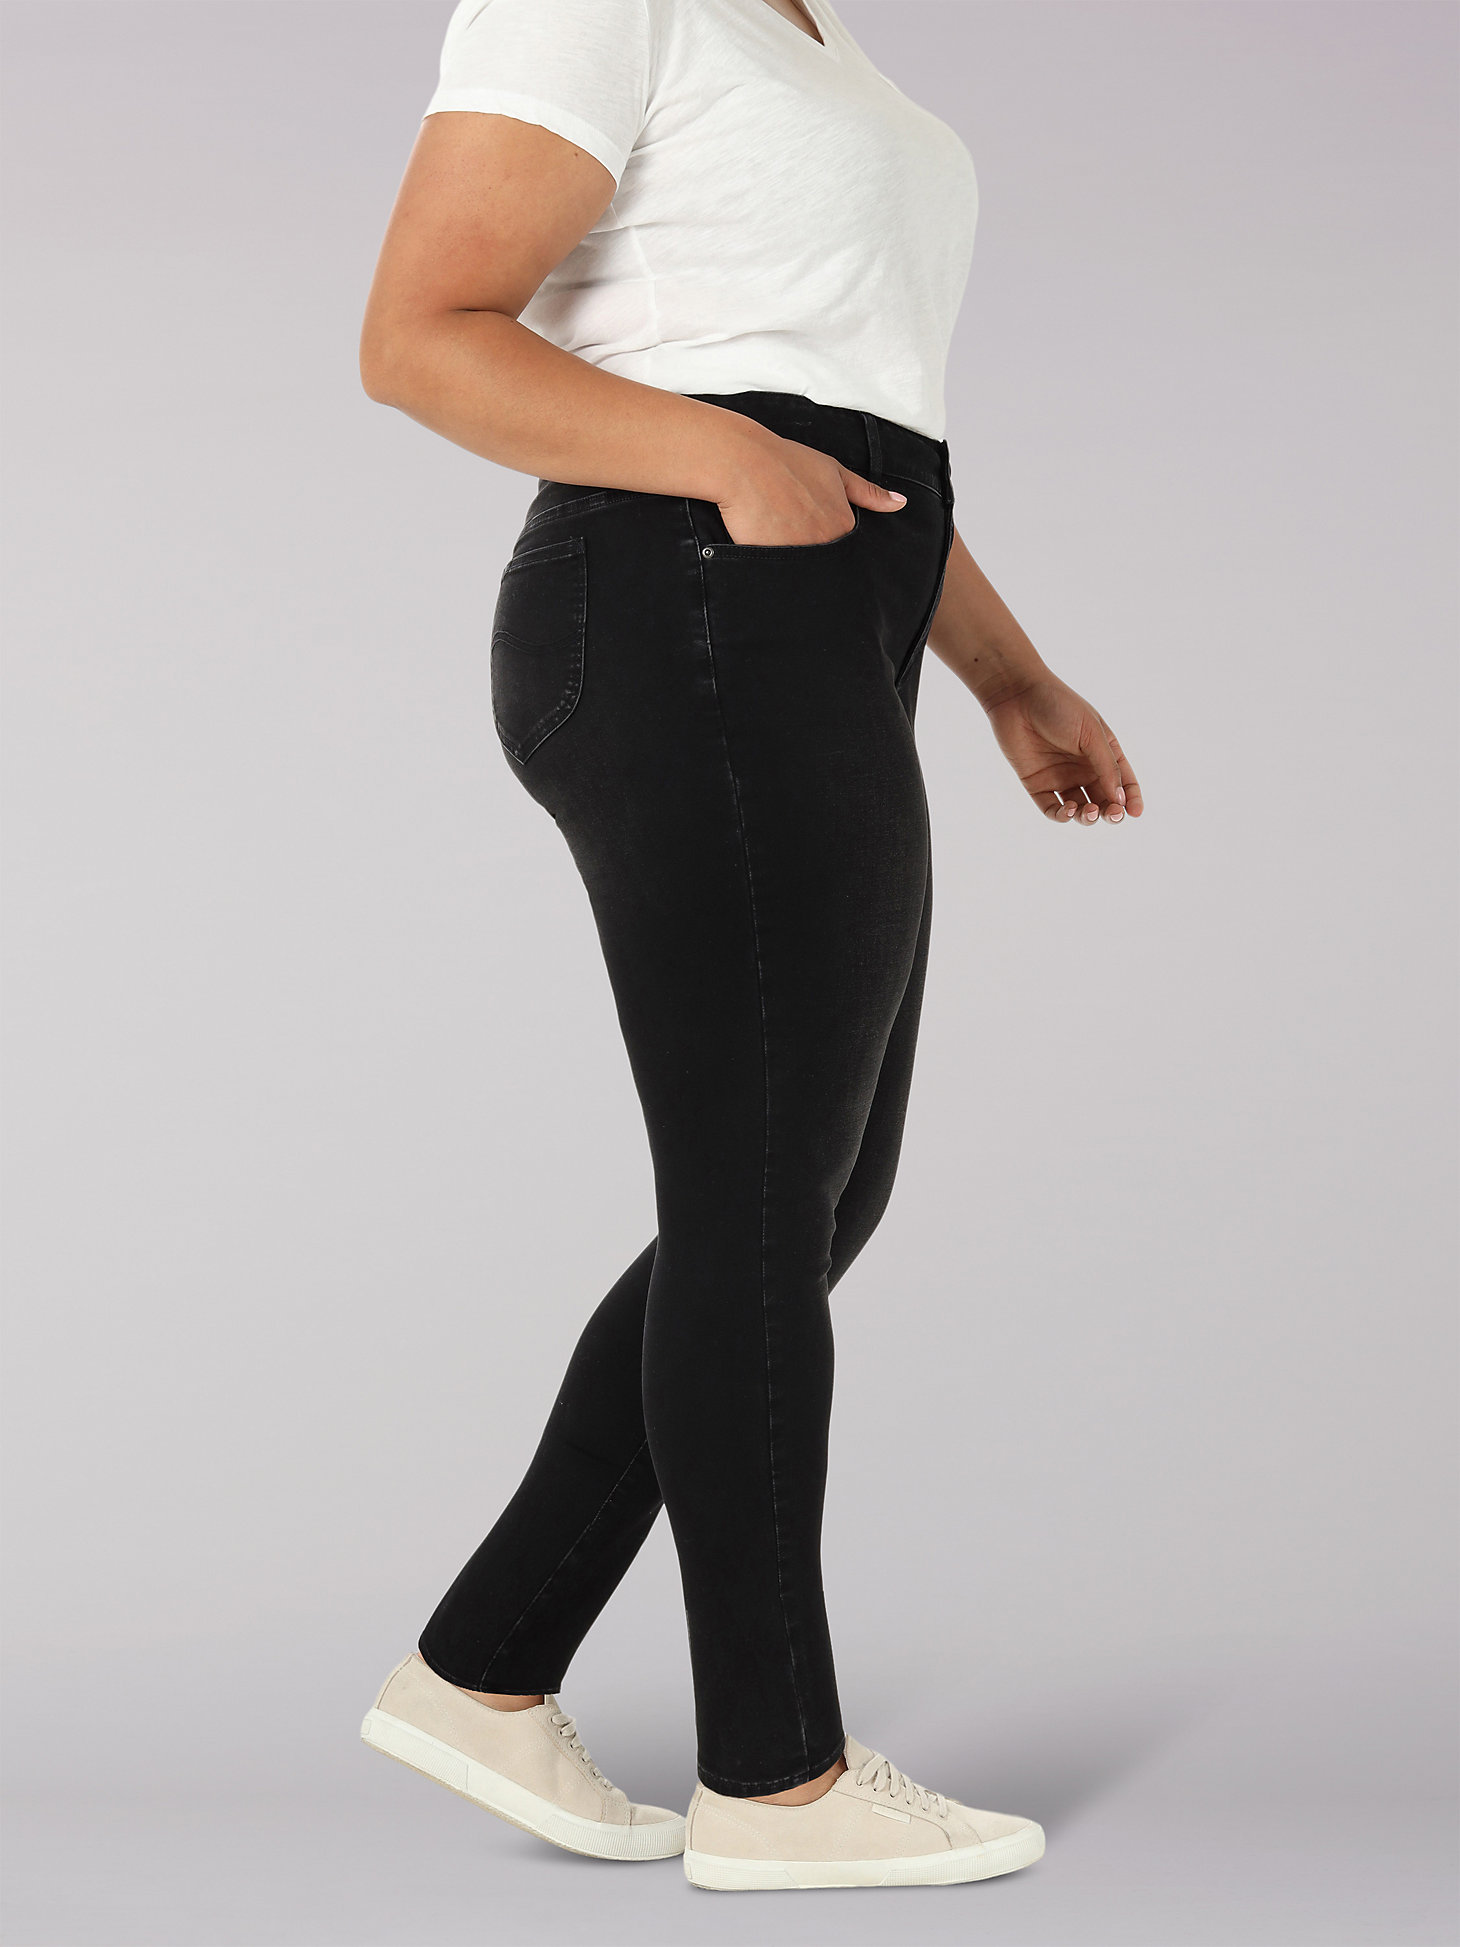 Women's Legendary Slim Fit Skinny Jean (Plus) in Black alternative view 2